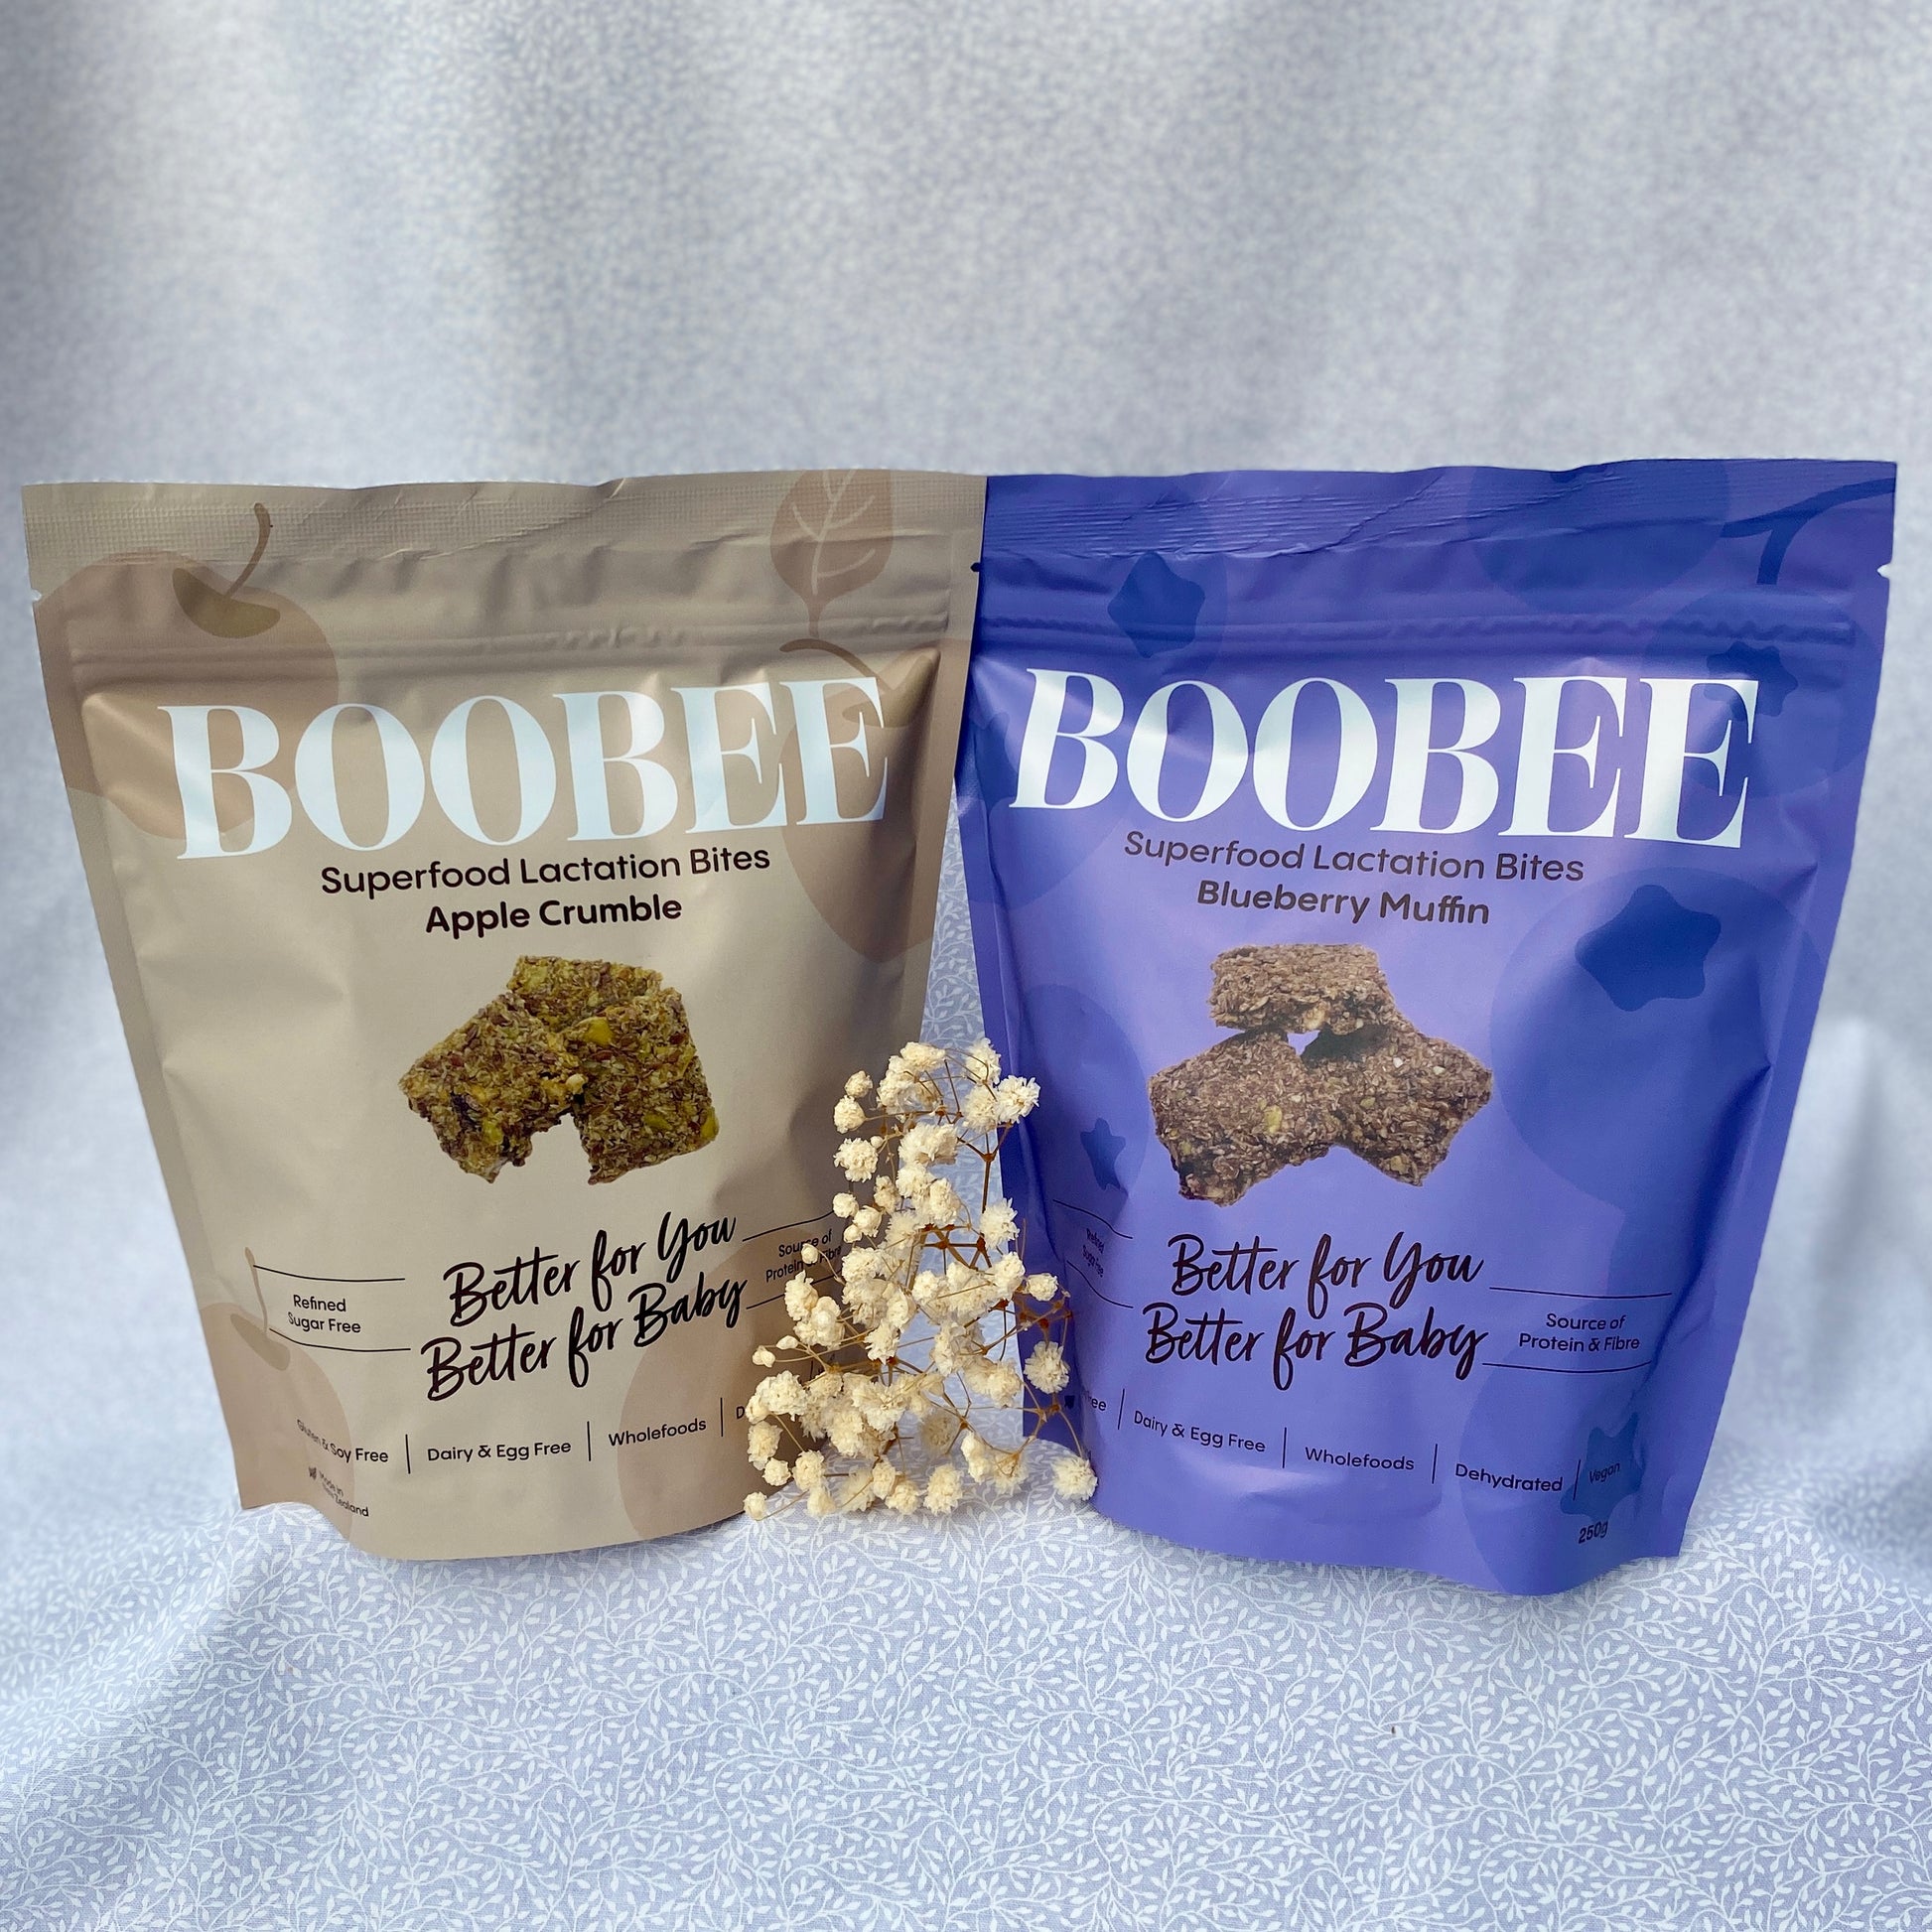 Boobee superfood lactation bites vegan, gluten free